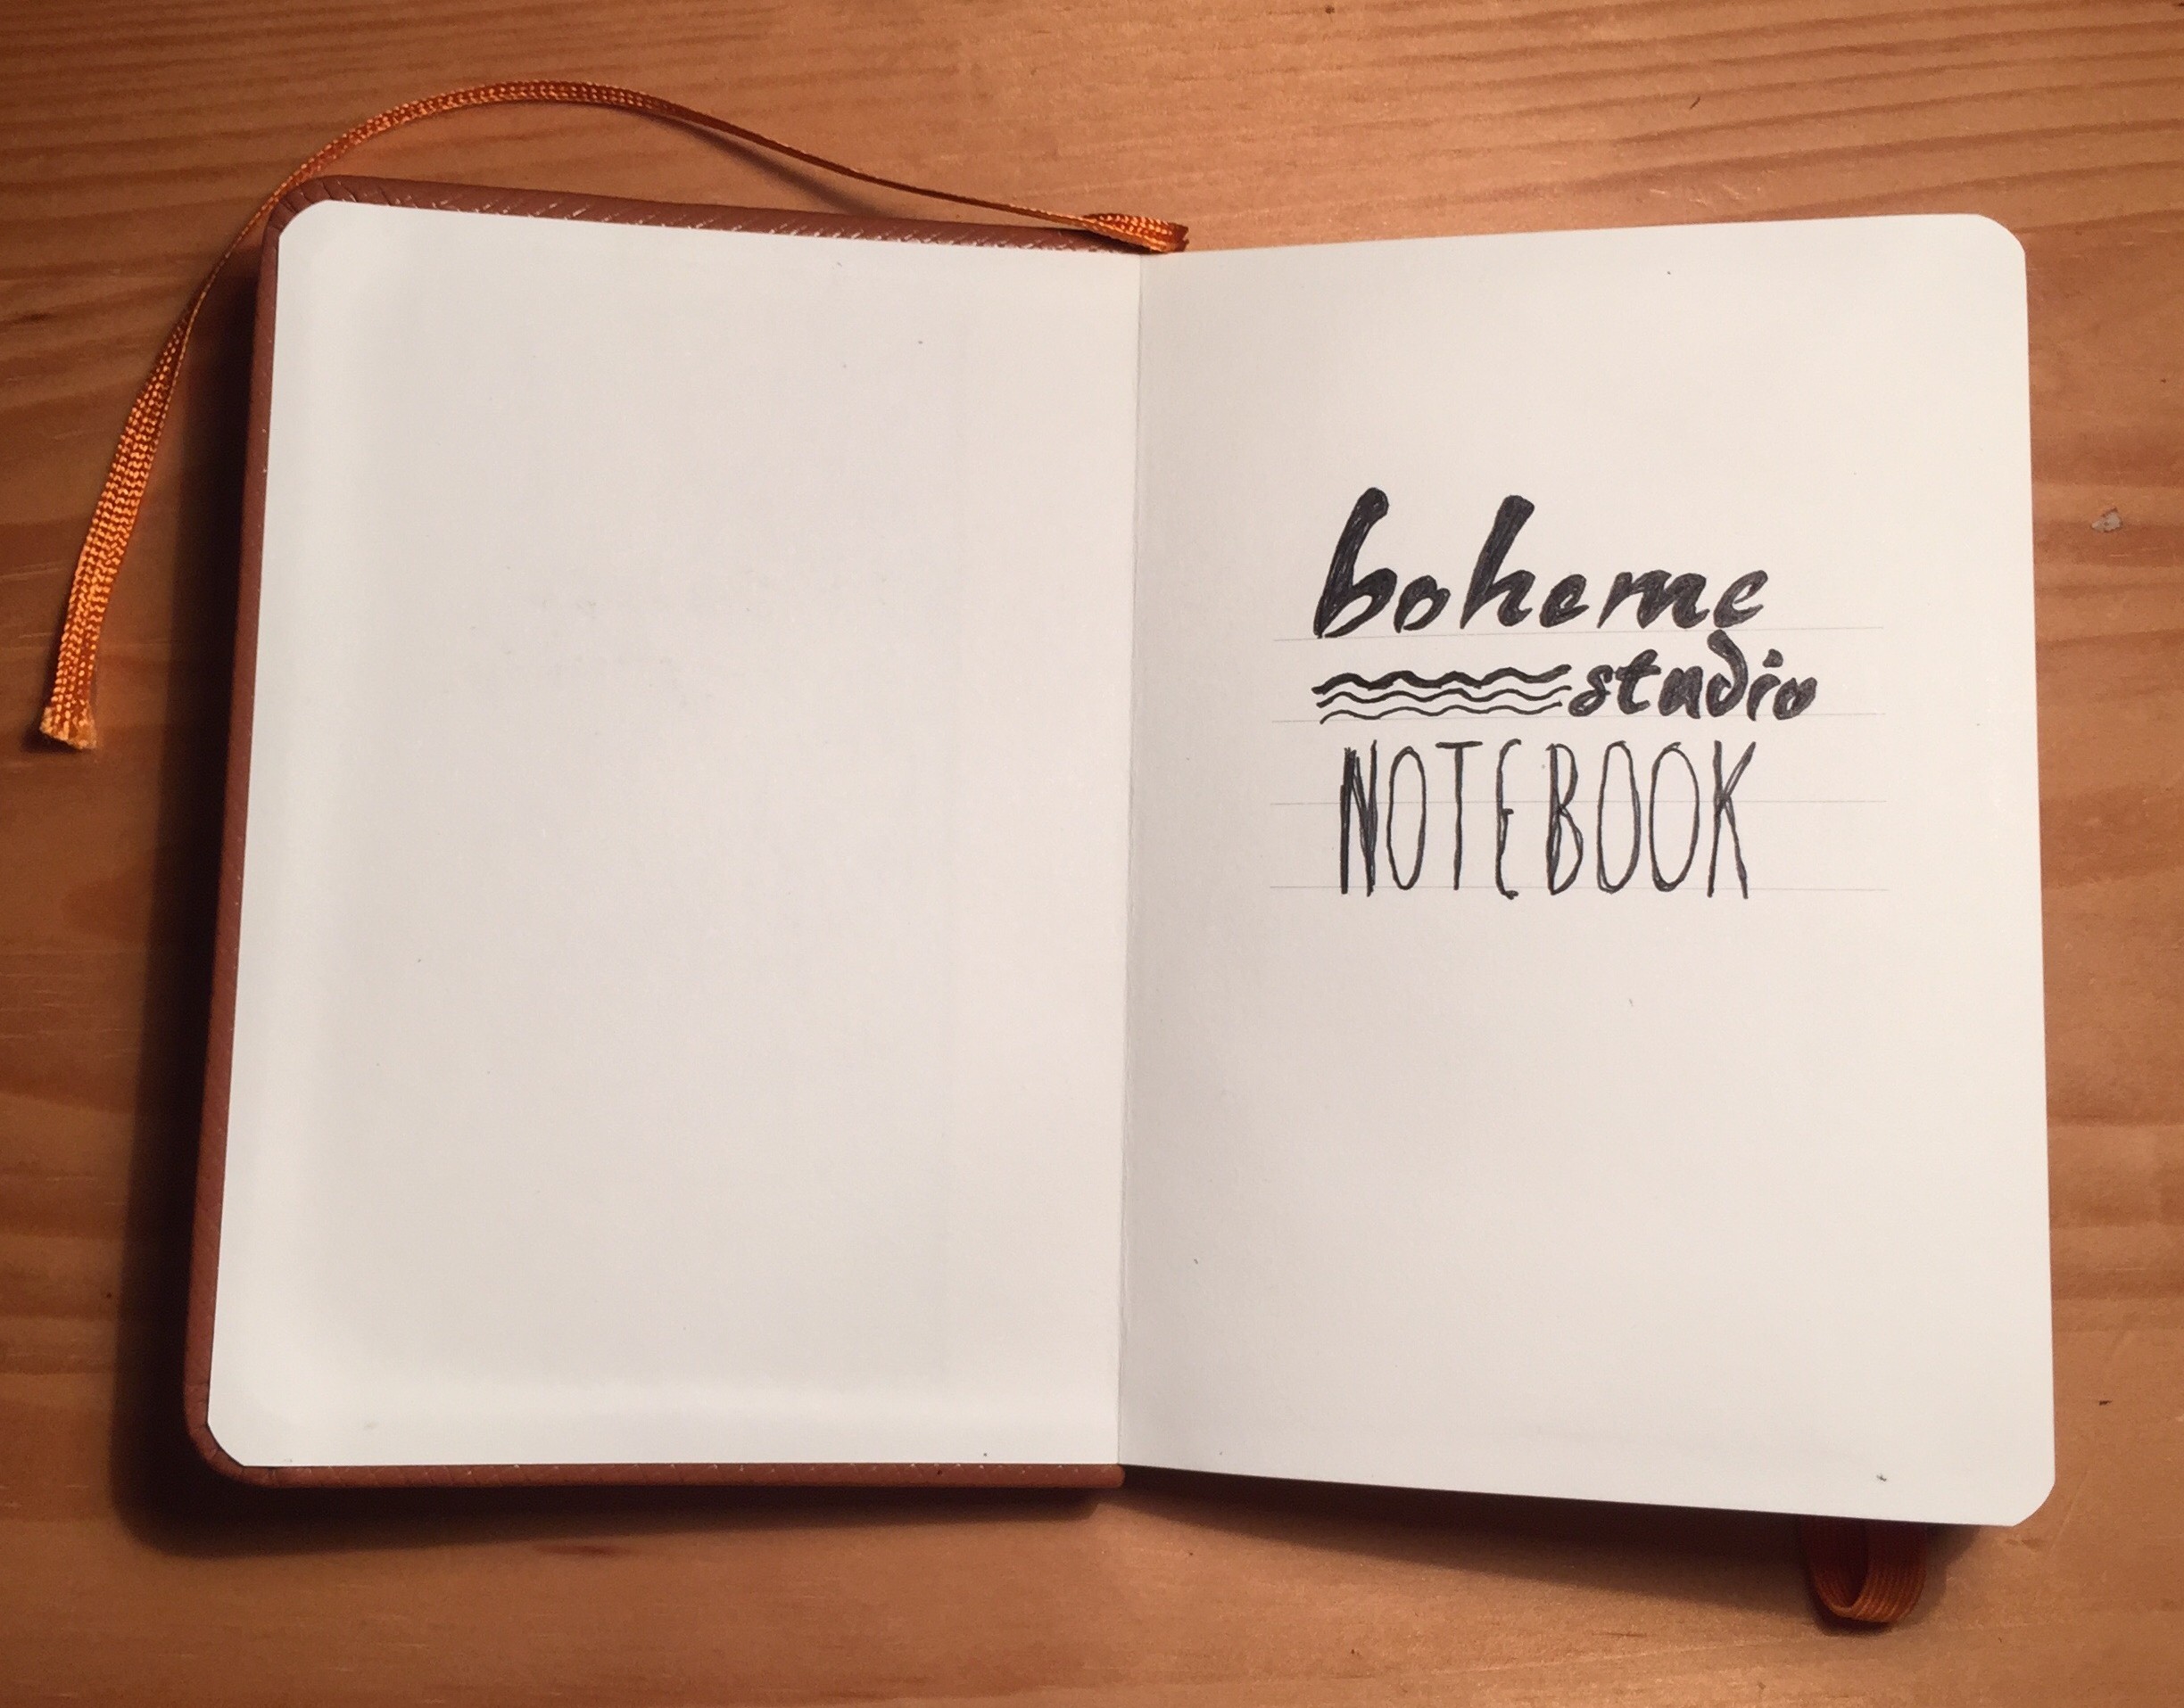 bohemestudio notebook